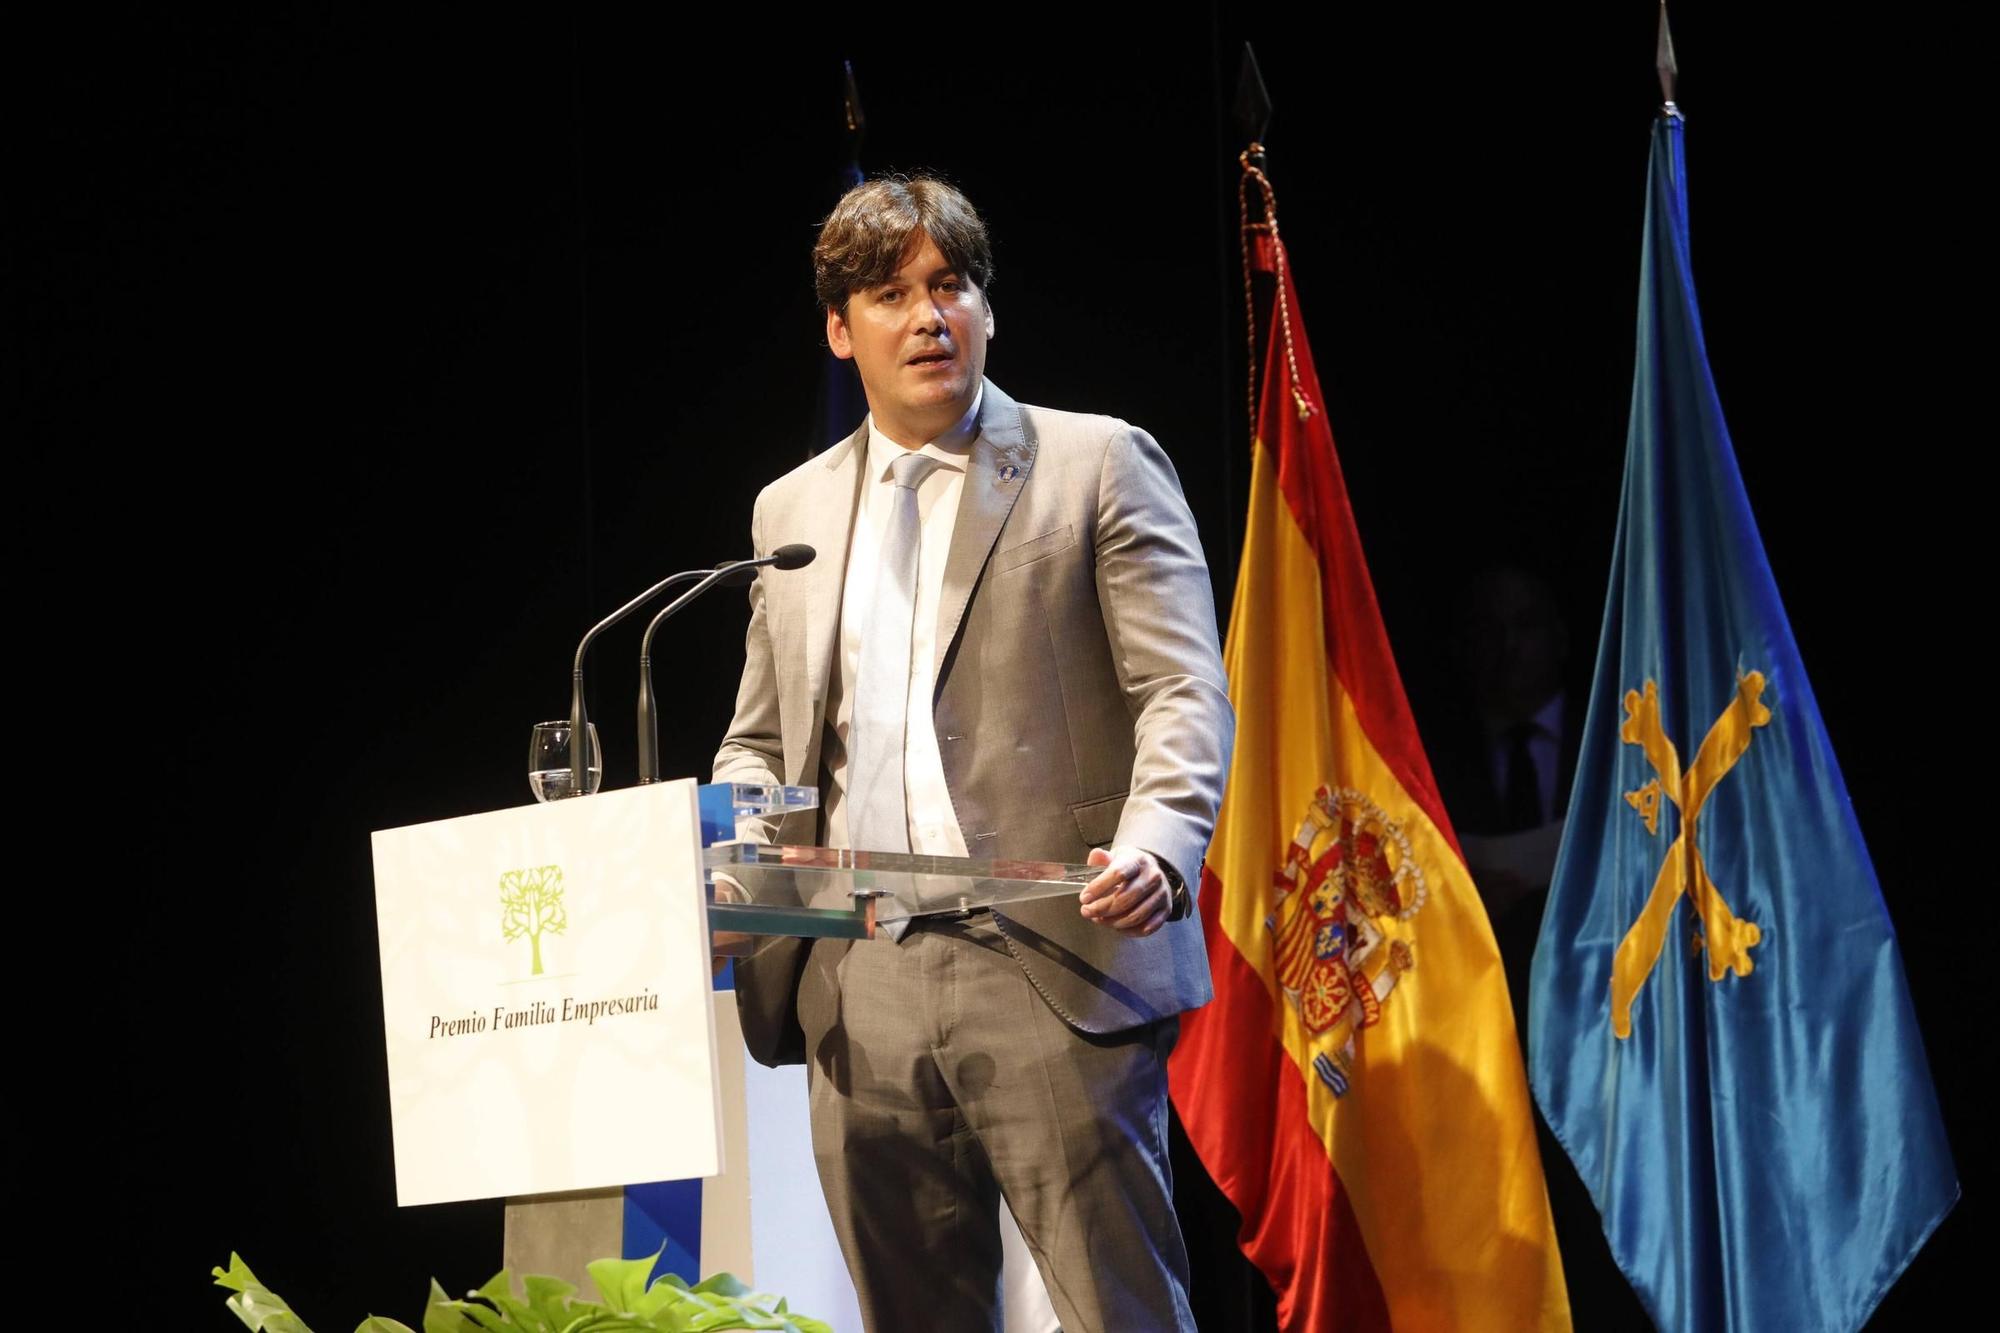 Entrega del premio "Familia Empresaria" a la familia Cosmen Menéndez-Castañedo